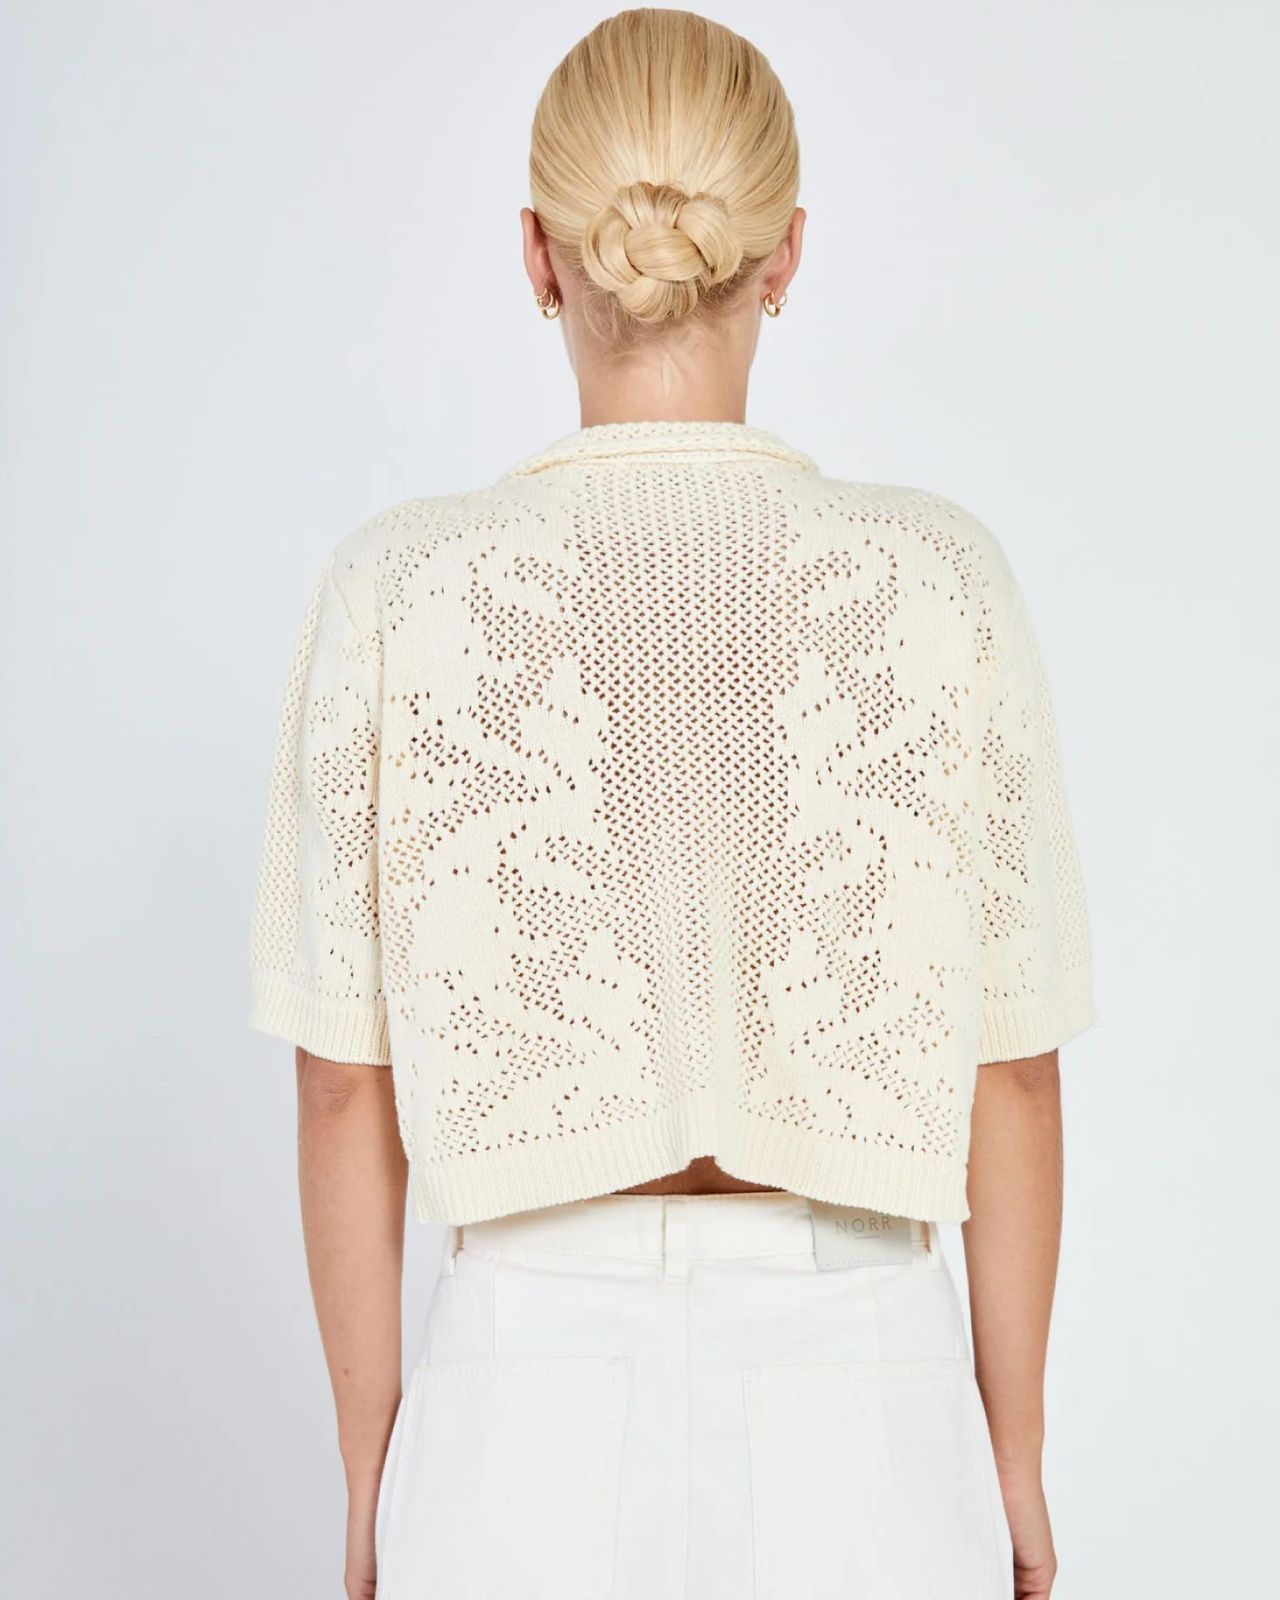 Cardigan Stilla Crochet - Off White - M